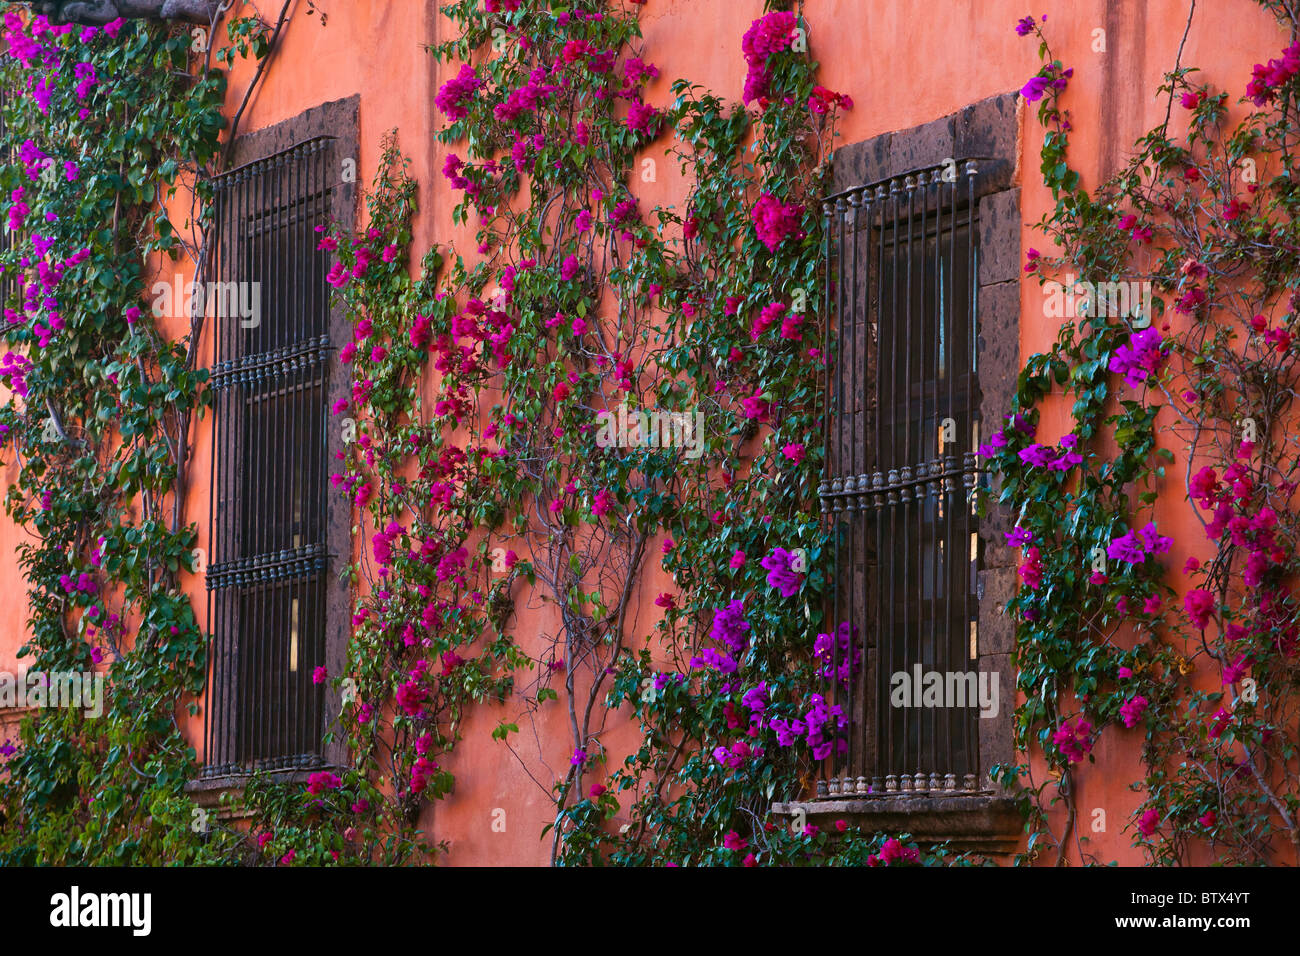 BOUGAINVILLEA (Bougainvillea glabra) grows on the colorfulc walls of SAN MIGUEL DE ALLENDE, MEXICO Stock Photo